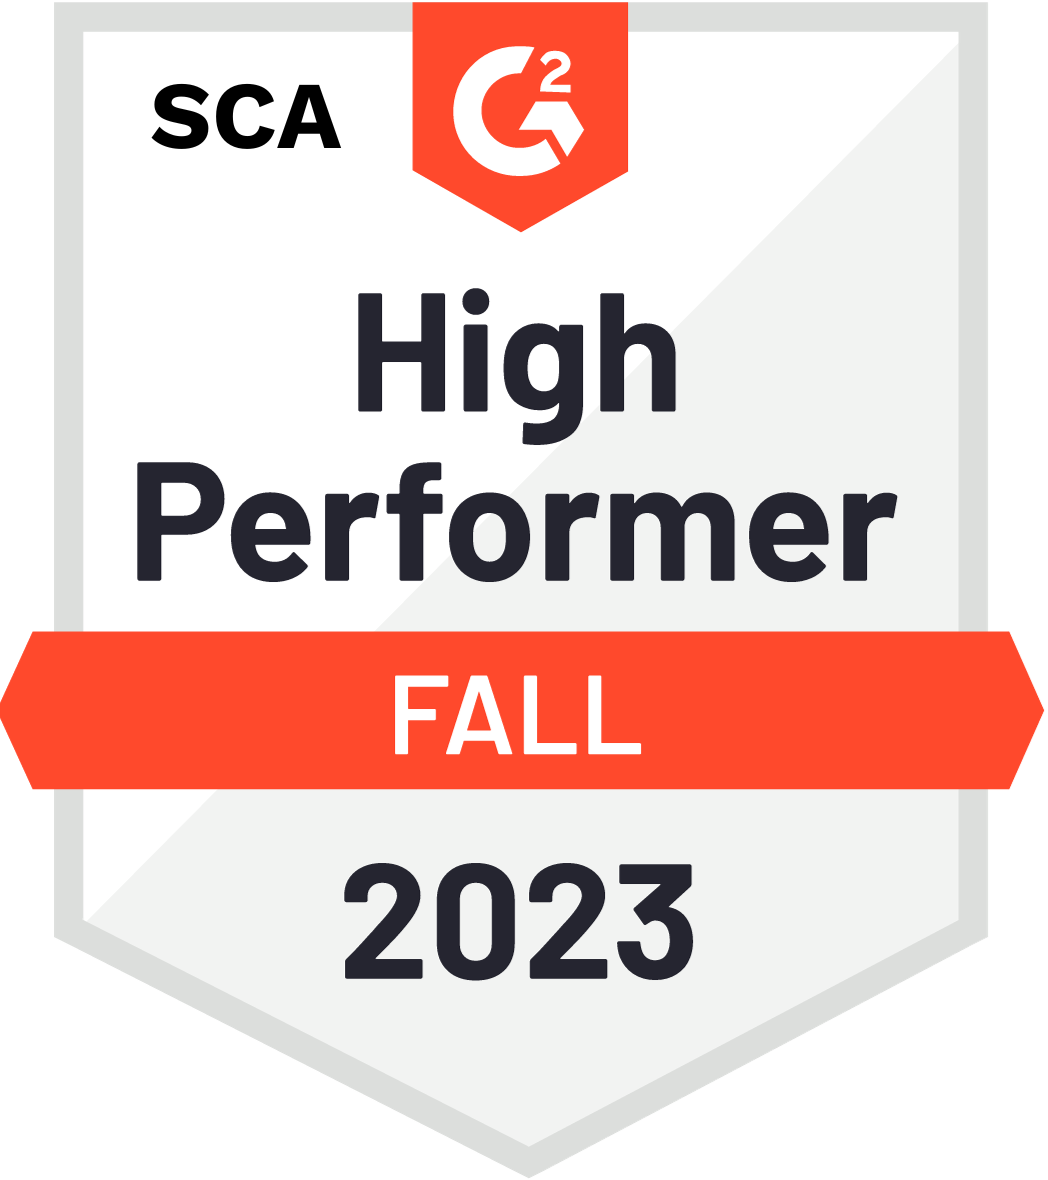 G2 SCA fall high performer